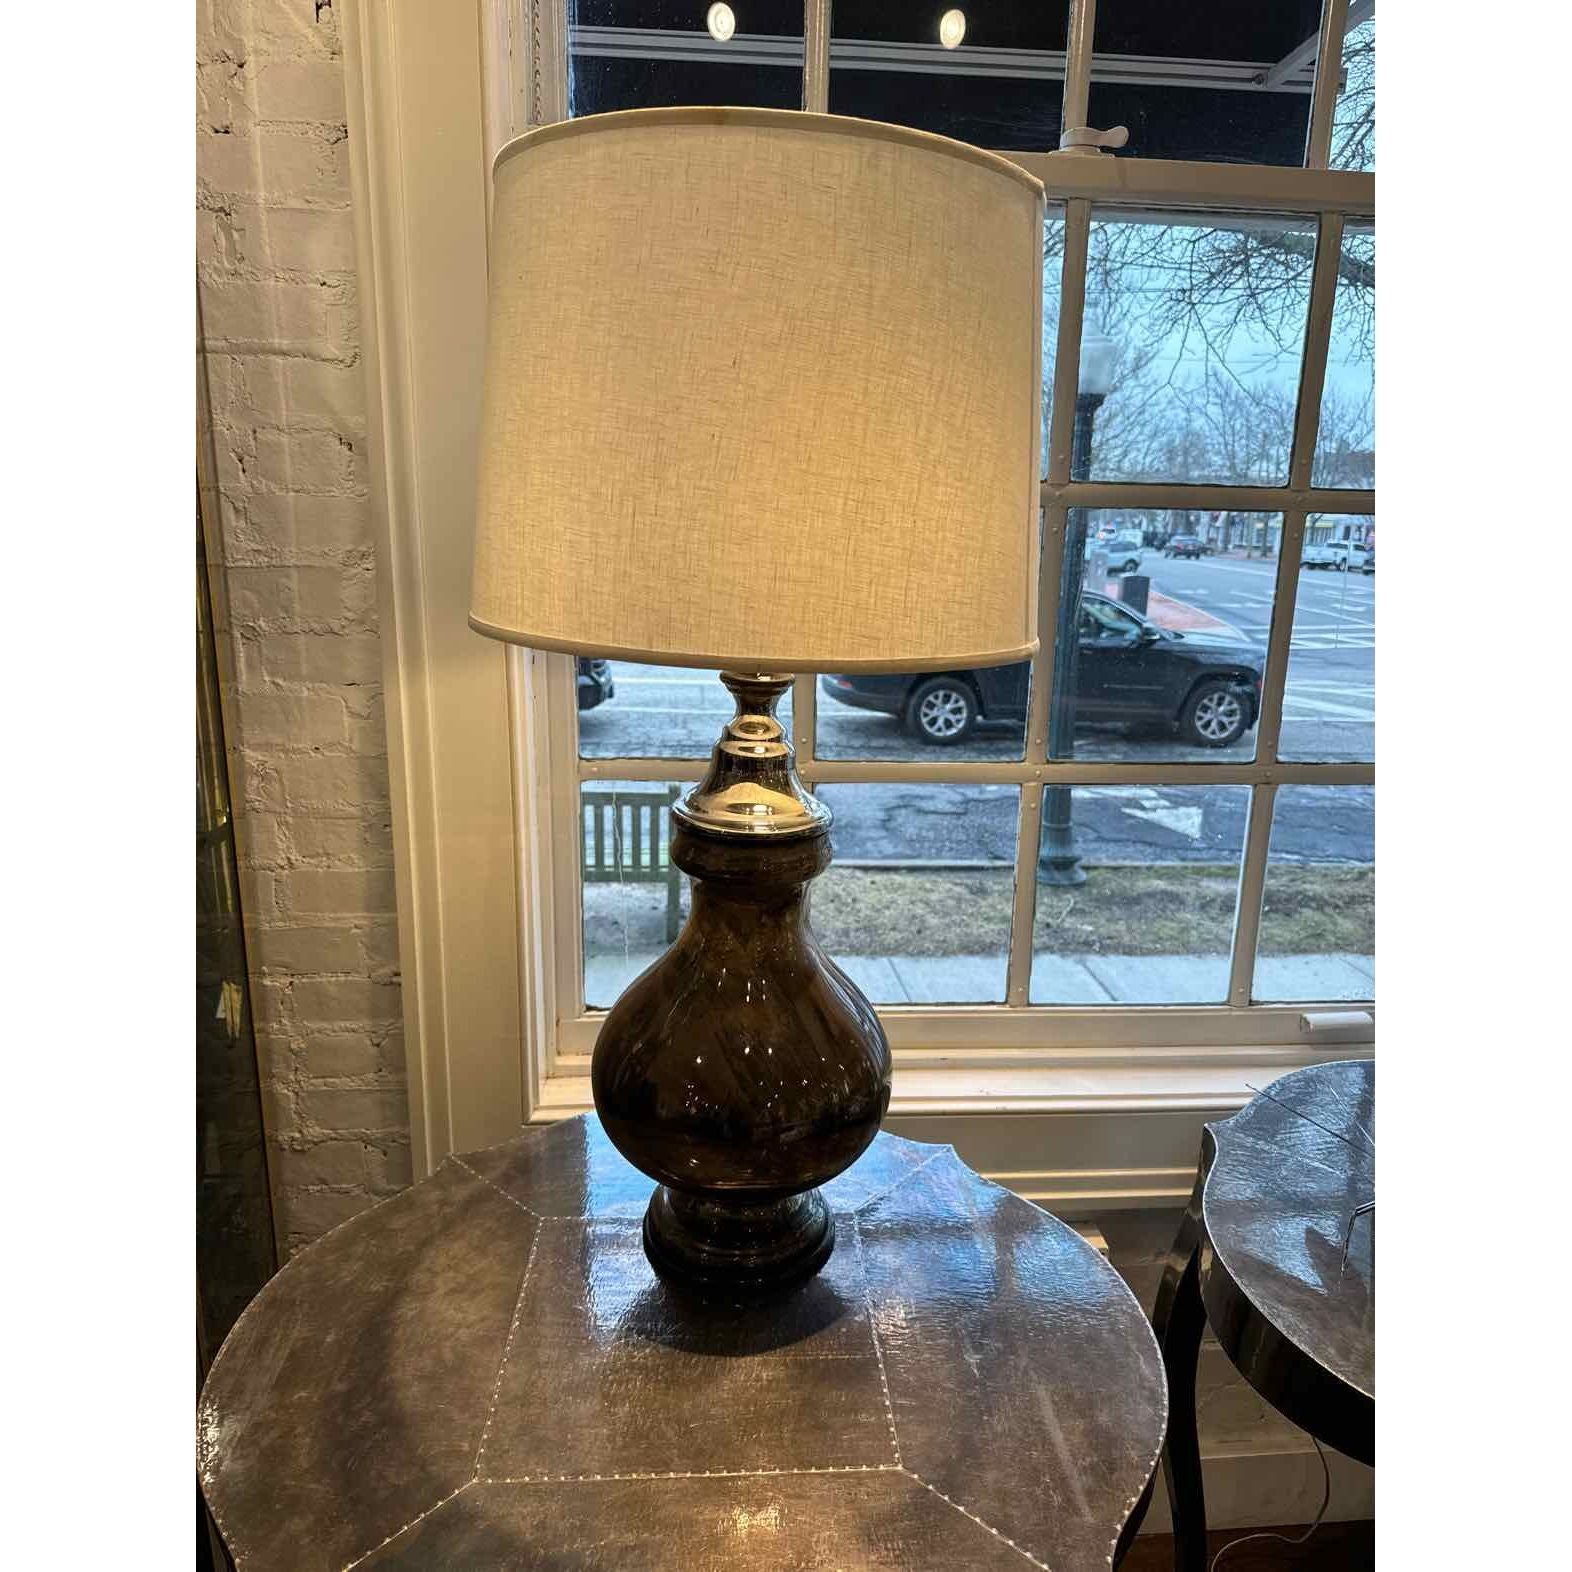 Large Mercury Glass Table Lamp w/ White Linen Shade 18"Diamx35"H